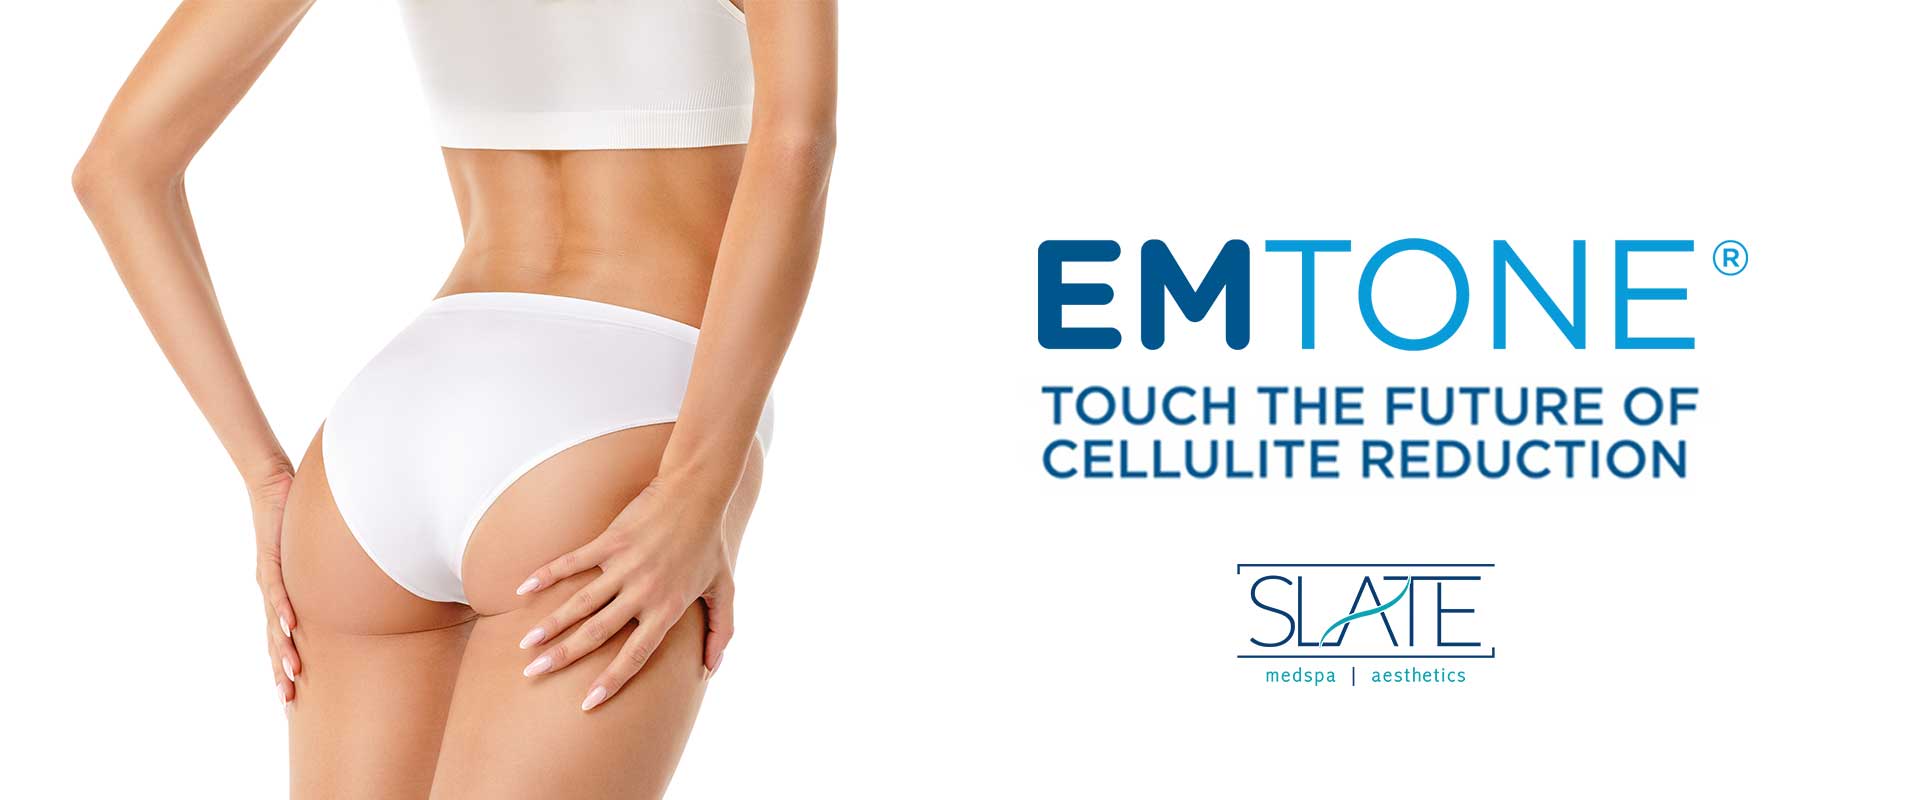 EMTONE® cellulite treatment by Slate Medspa in Paramus, NJ and Wayne, NJ